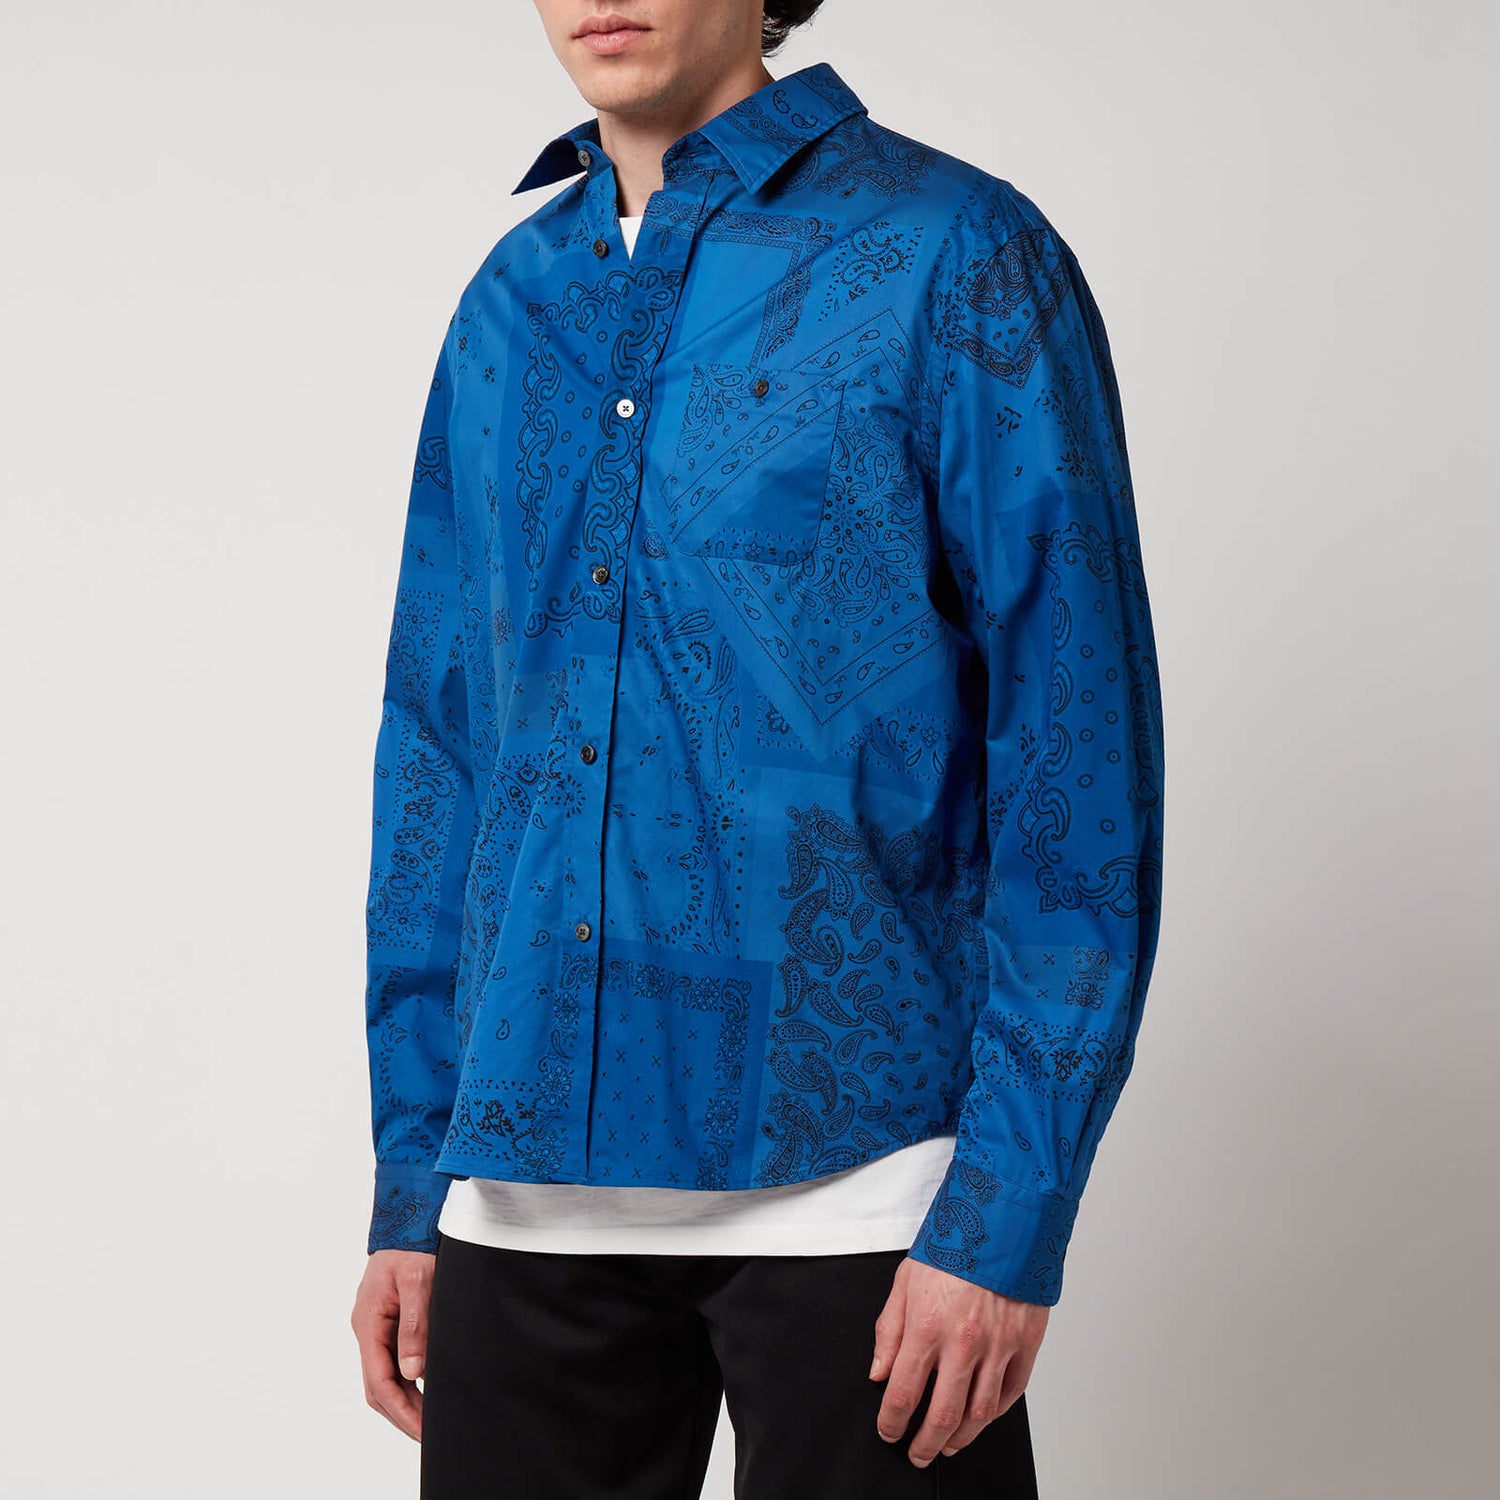 KENZO Men's Printed Casual Shirt - Royal Blue - 39/15.5inches